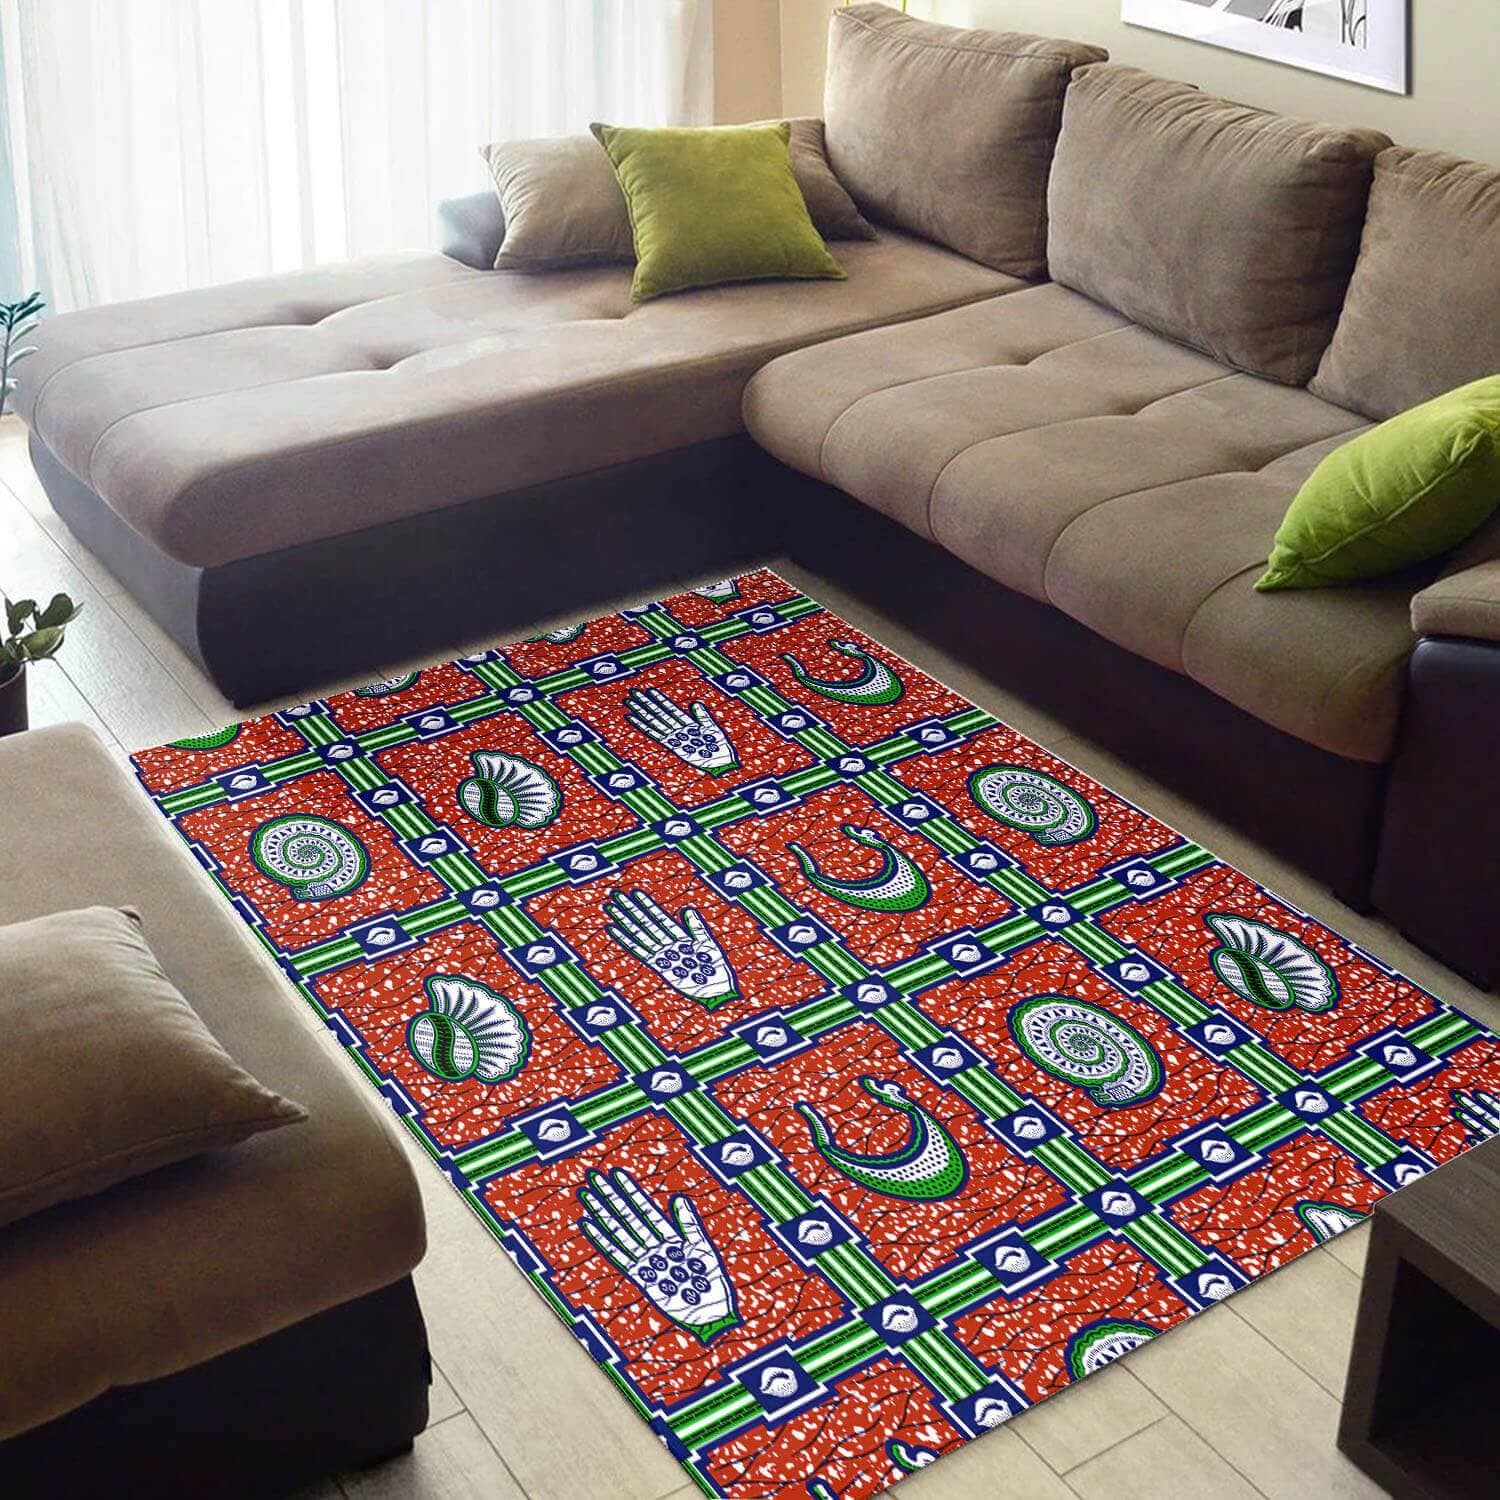 Cool African Style Amazing American Black Art Ethnic Seamless Pattern Carpet Room Rug